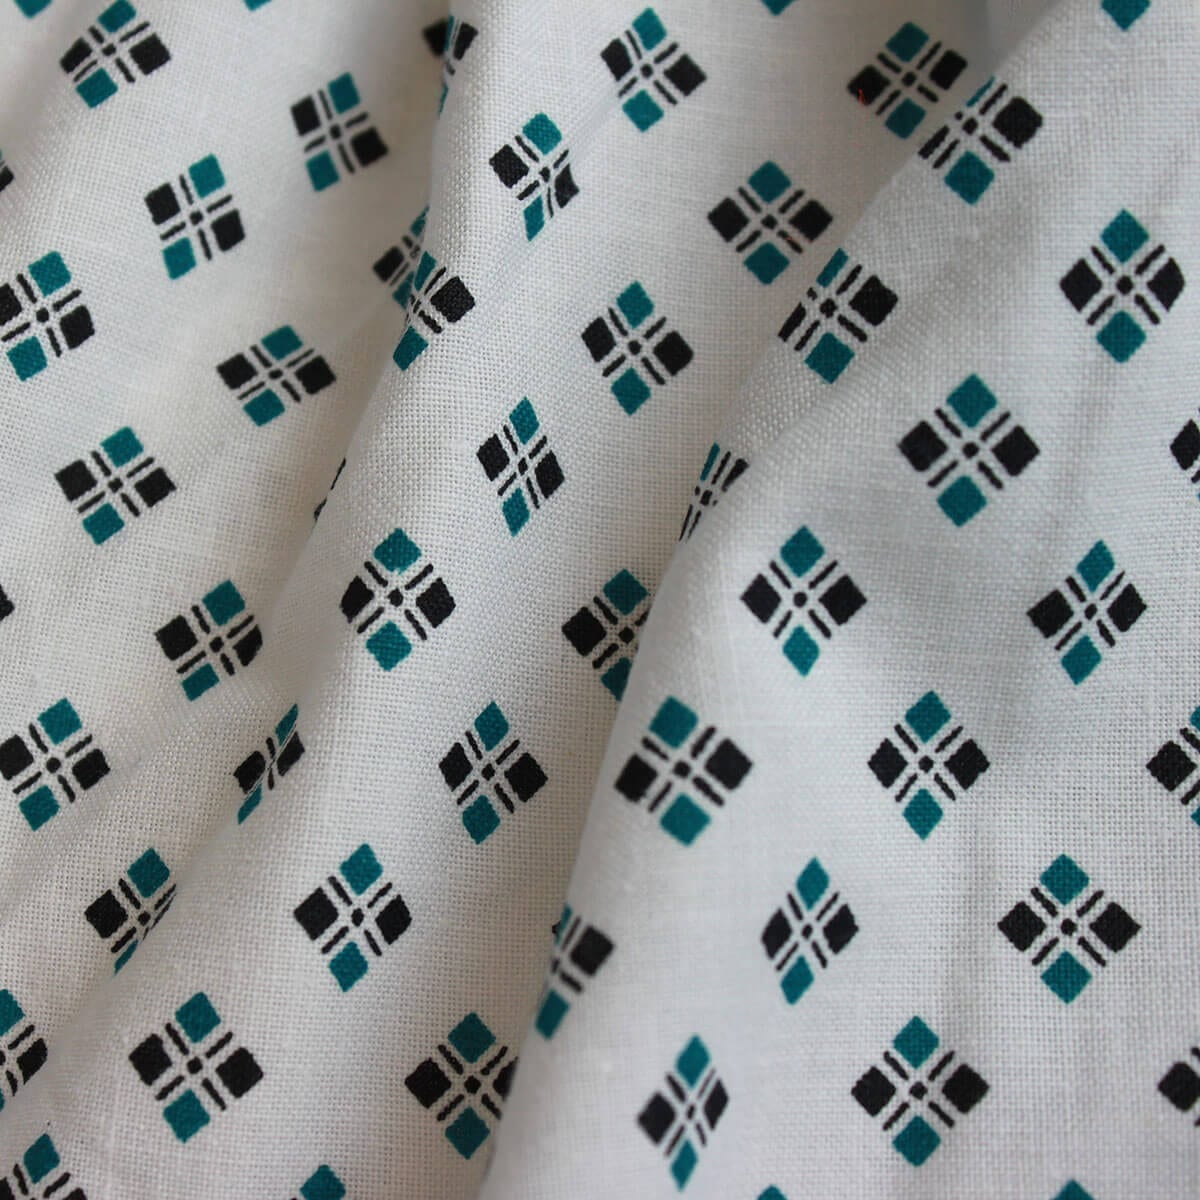 Hospital bariatric 10XL gown - fabric